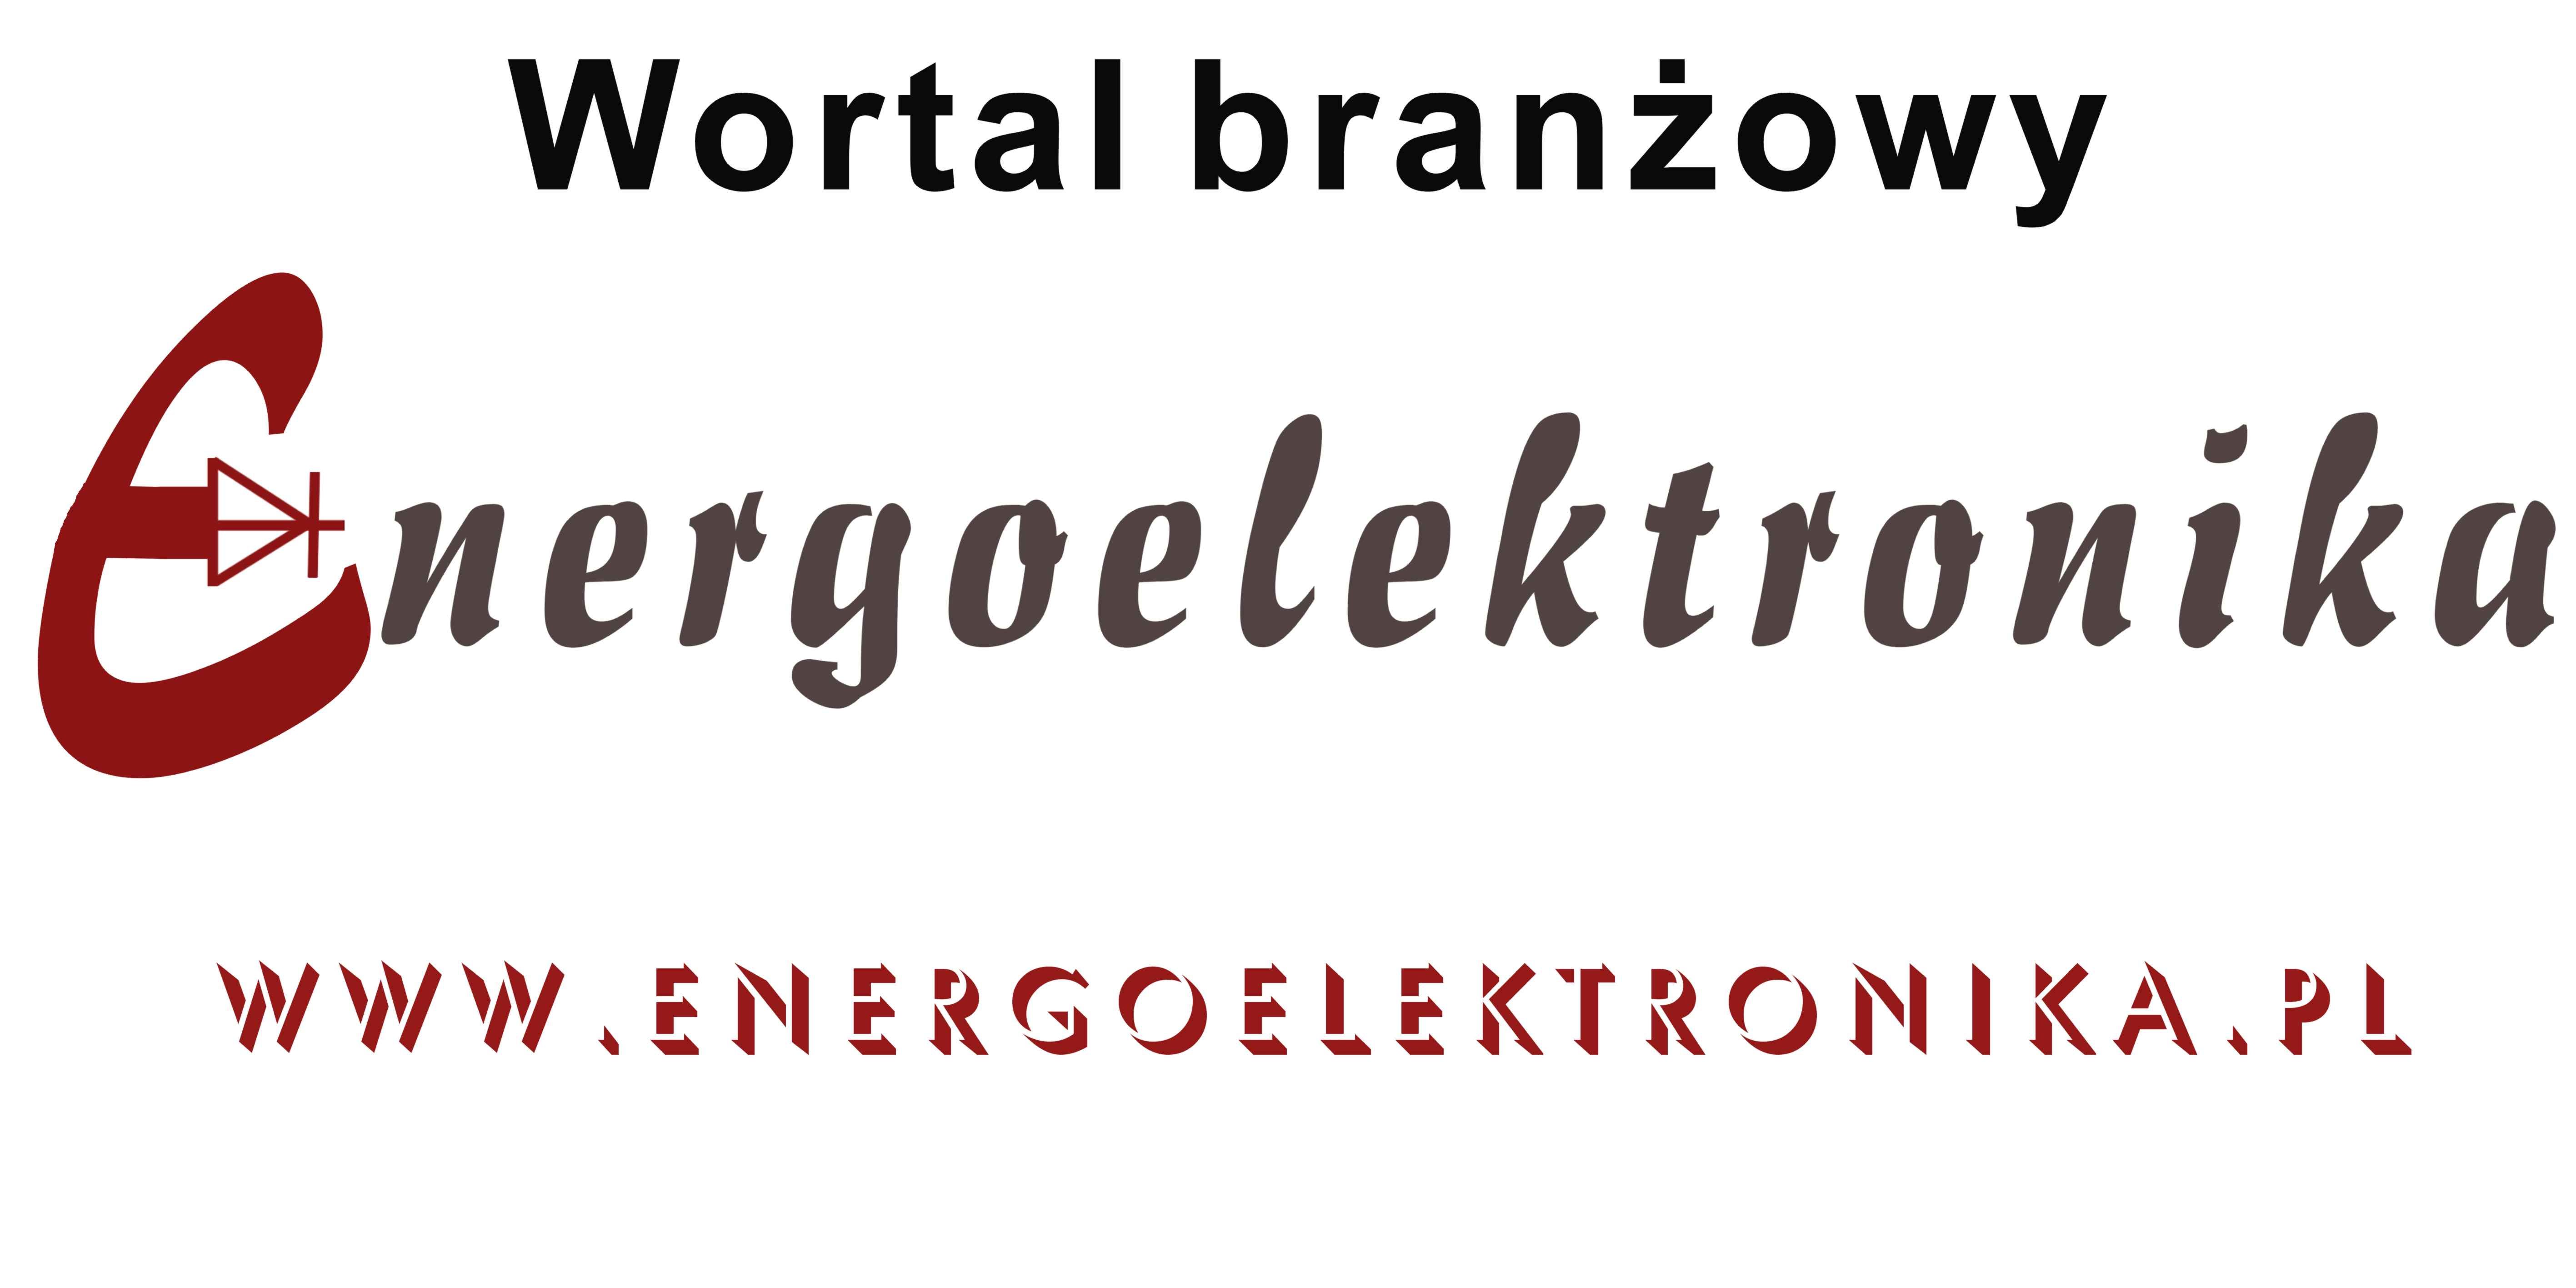 www.energoelektronika.pl